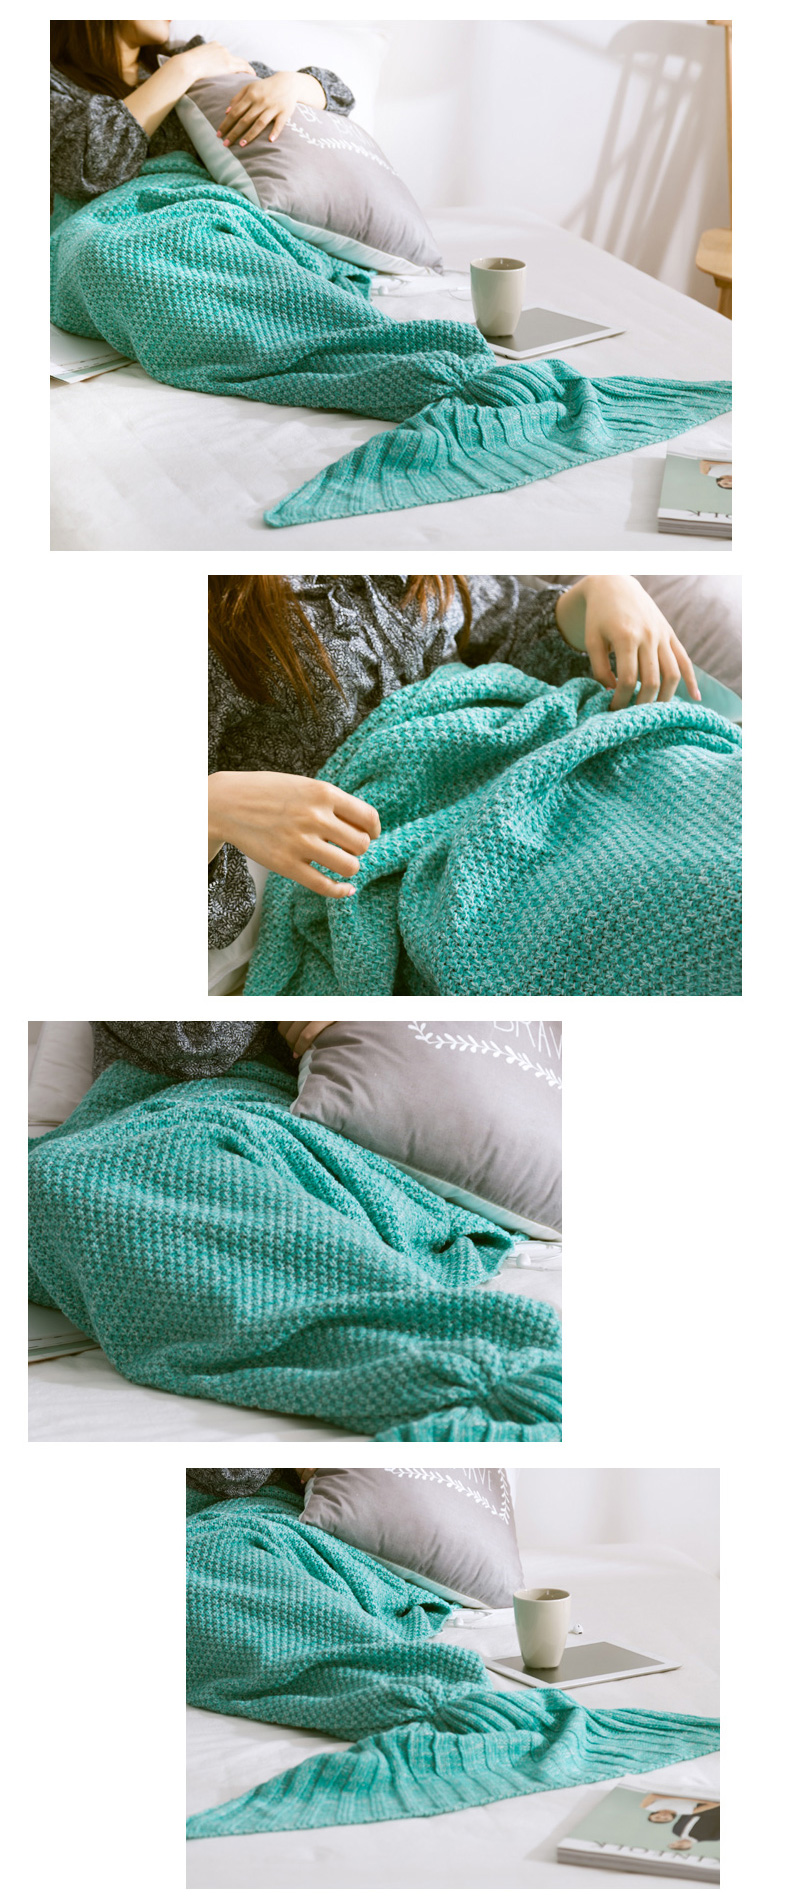 Honana-WX-29-3-Size-Yarn-Knitting-Mermaid-Tail-Blankets-Fibers-Warm-Soft-Home-Office-Sleep-Bag-Bed-M-1093602-2